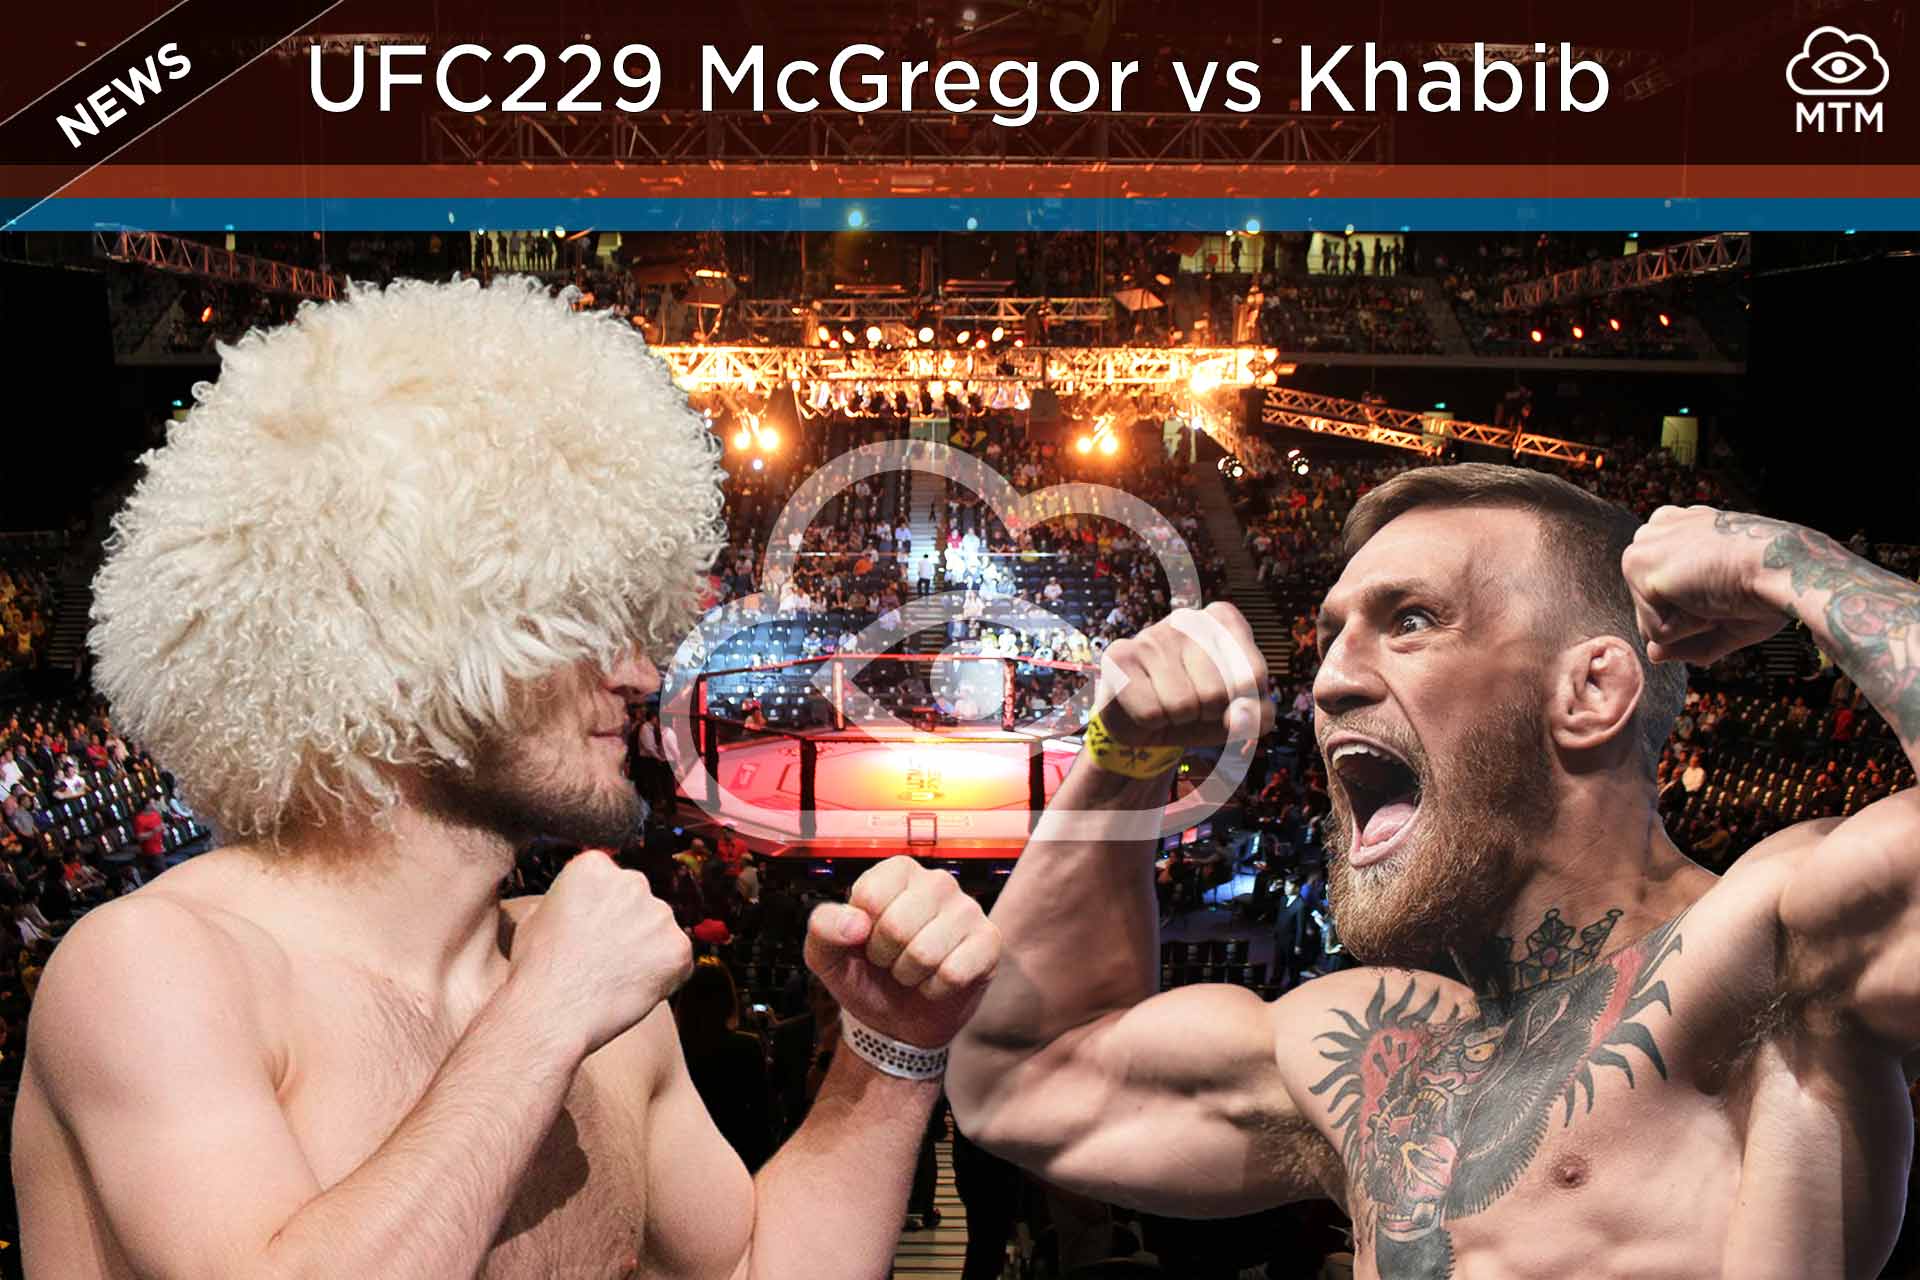 Nola ikusi UFC 229 McGregor vs Khabib Fight Live Streaming Online